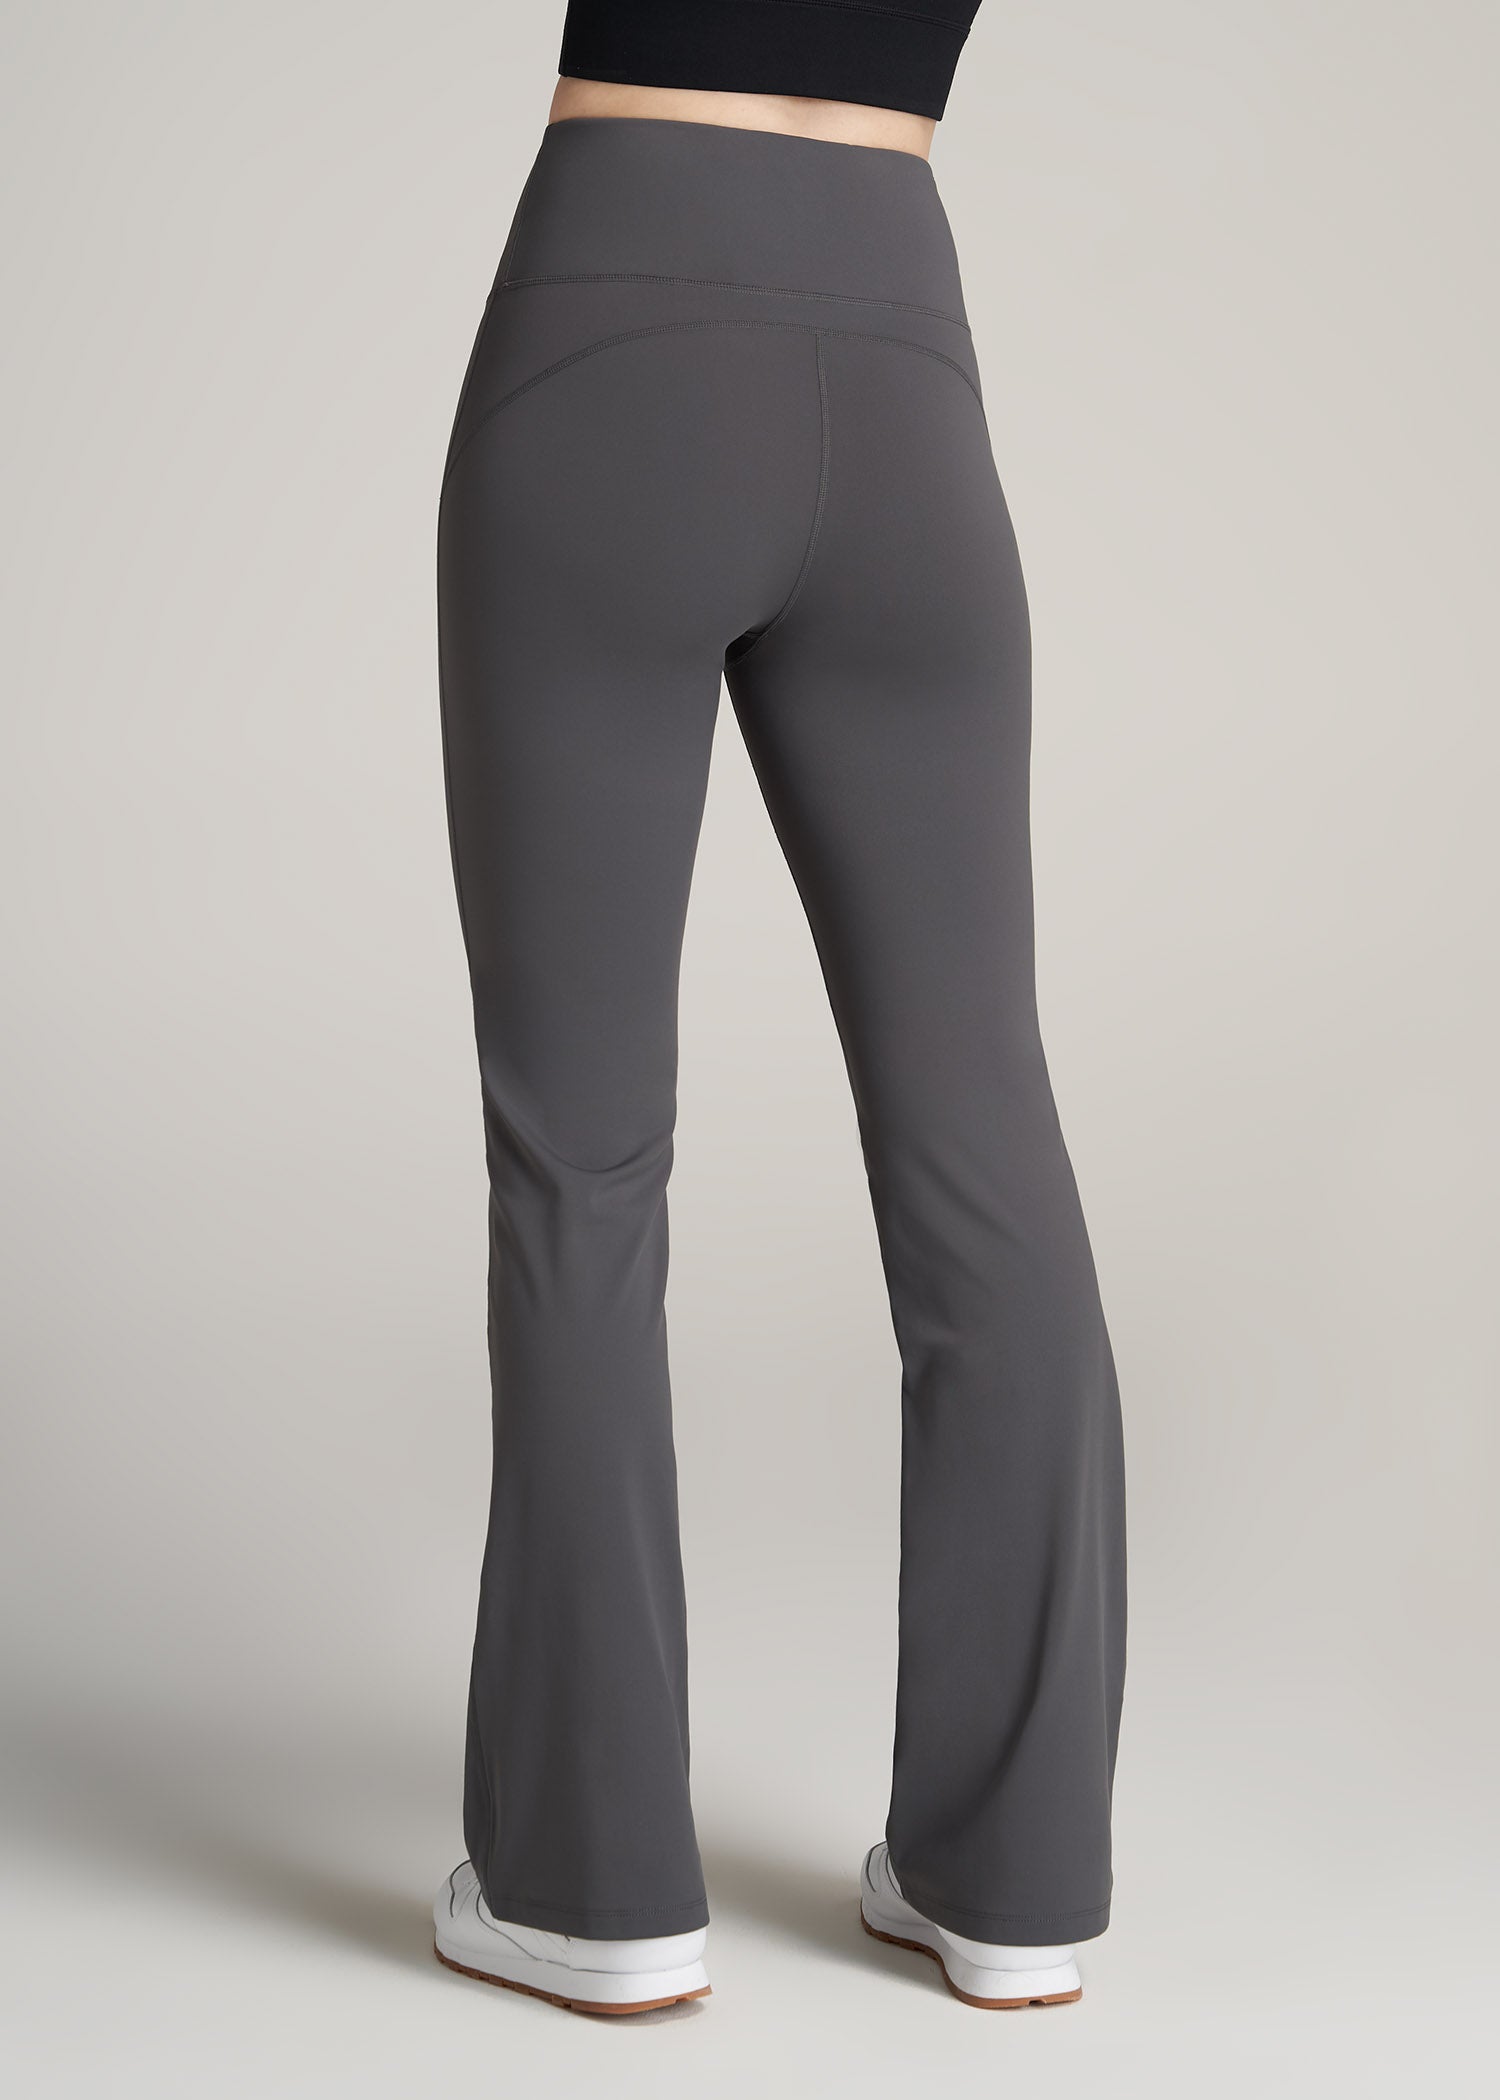 lululemon athletica, Pants & Jumpsuits, Lululemon Reversible Groove Pant  Regular Size 4